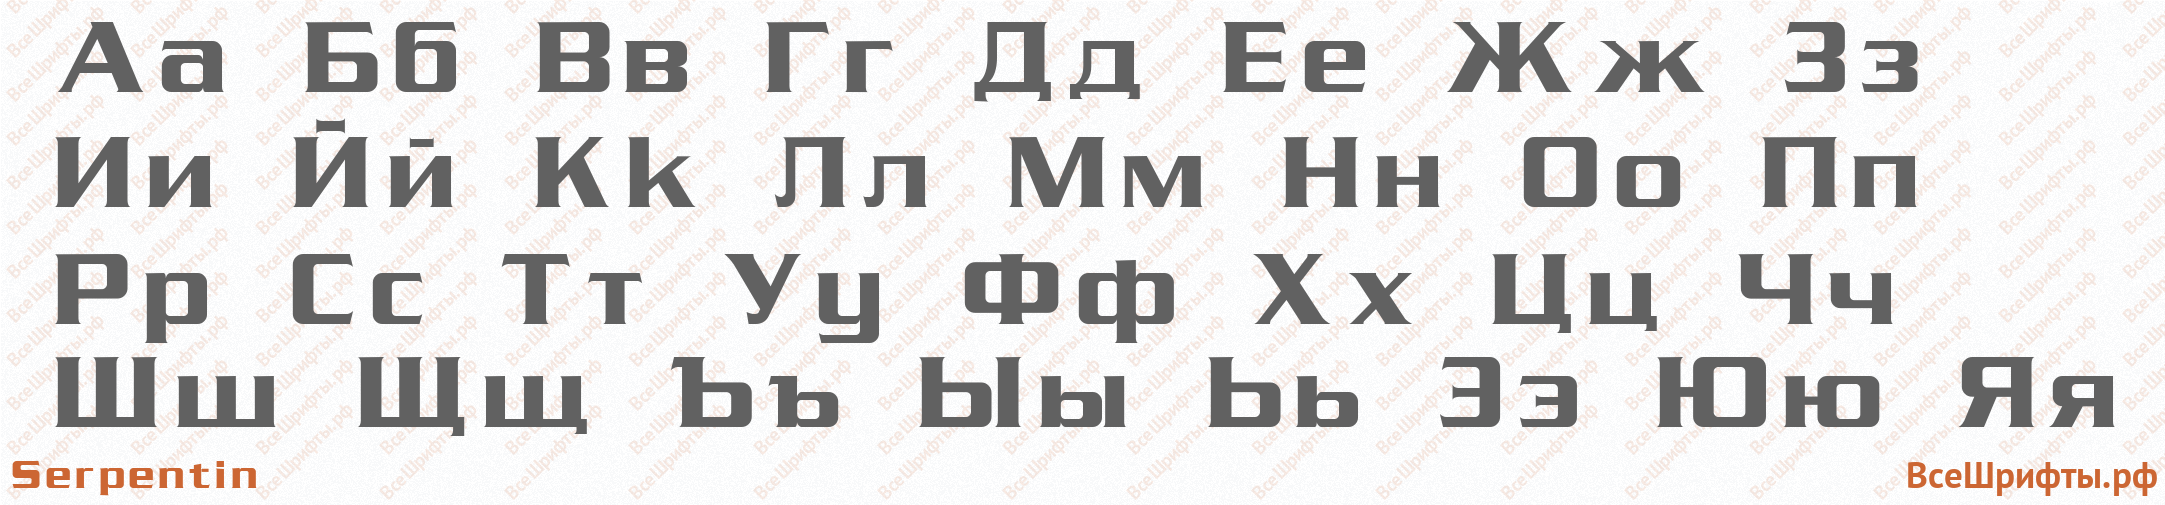 Шрифт Serpentin с русскими буквами